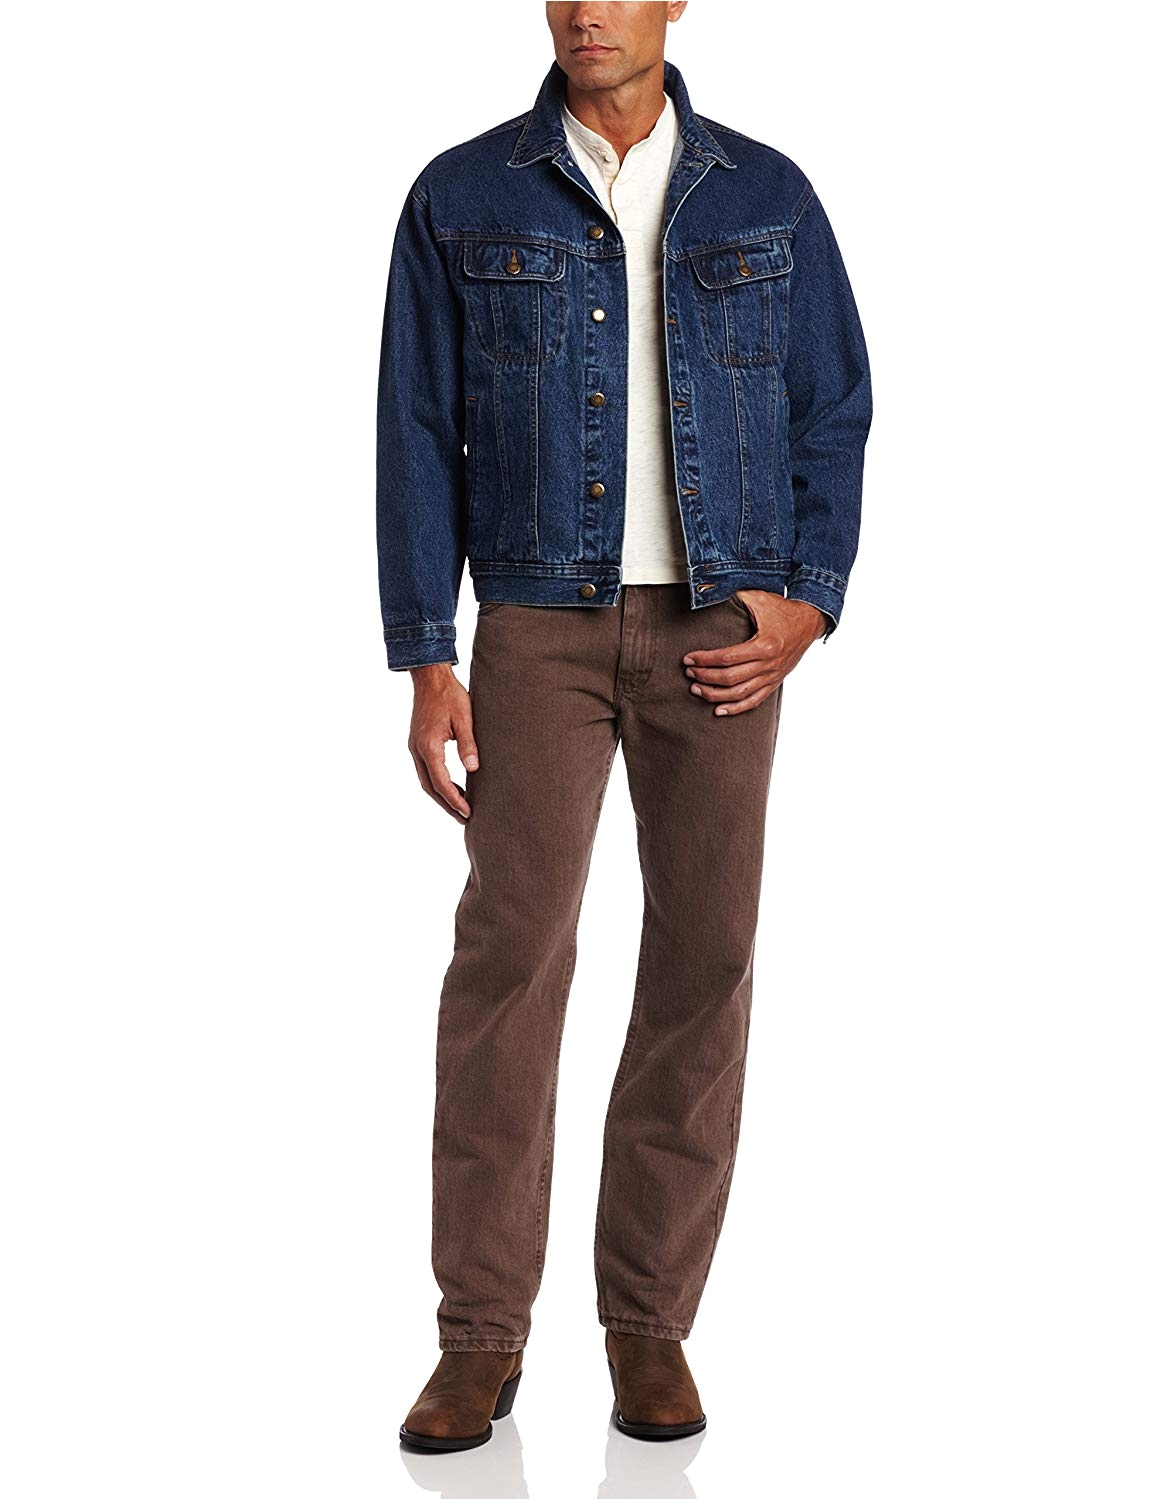 wrangler mens rugged wear unlined denim jacket at amazon mens clothing store blue jean jacket men